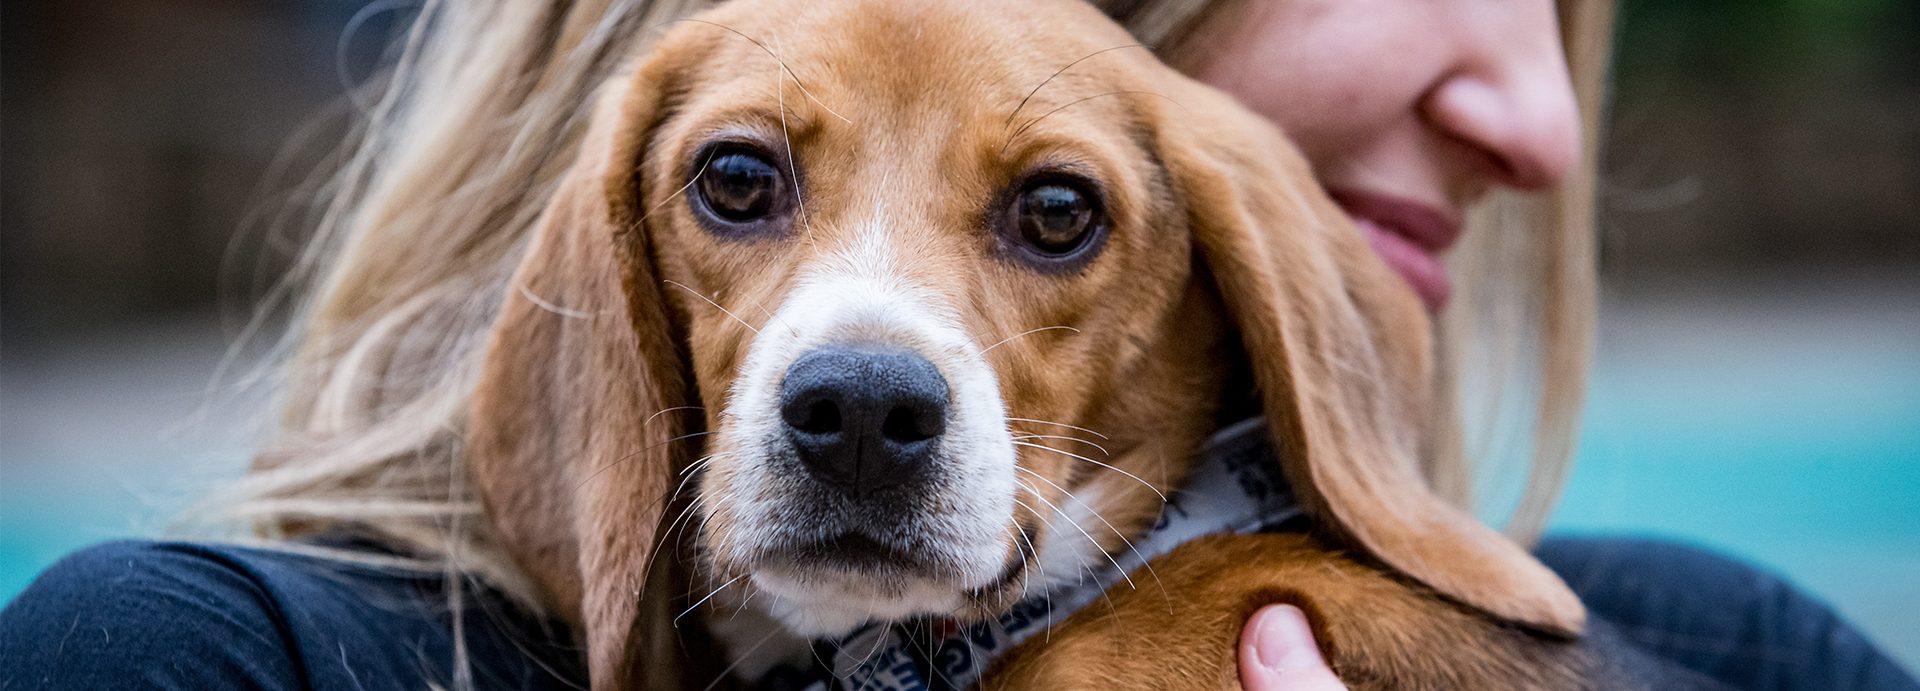 Massachusetts Senate passes bill to promote adoption of research animals